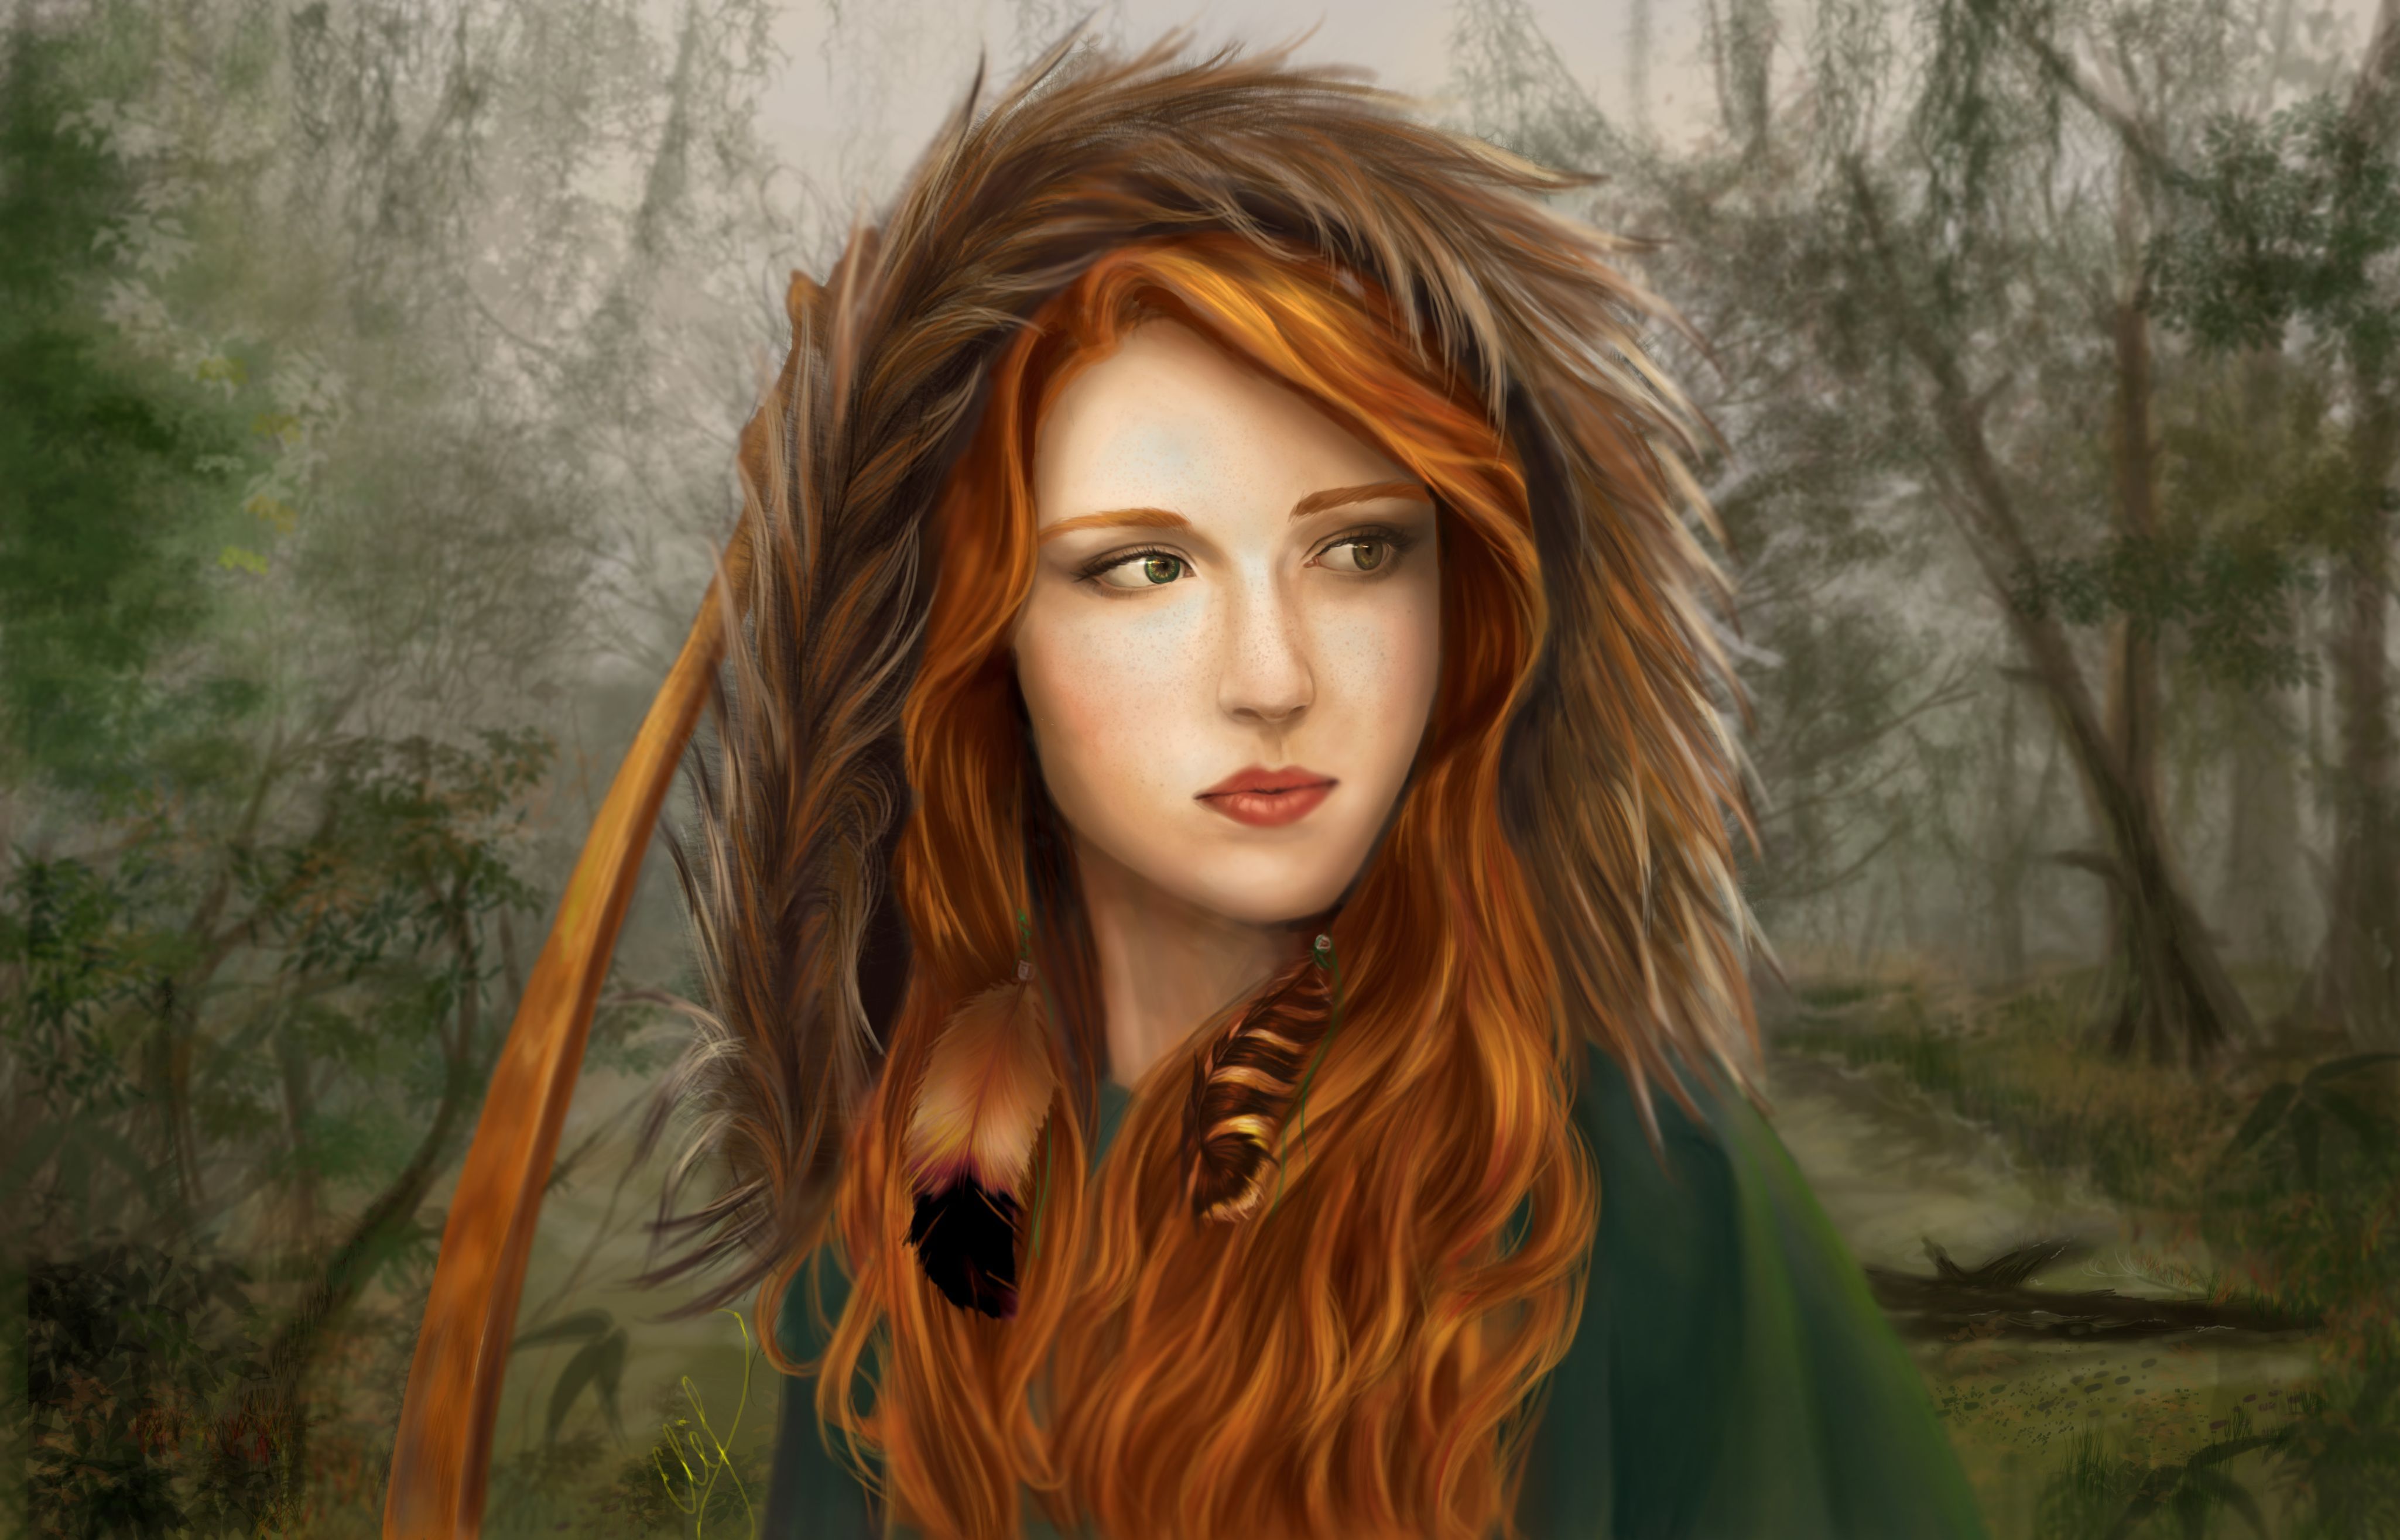 Redhead Painting. Painting Art Hair Redhead girl Fantasy Girls